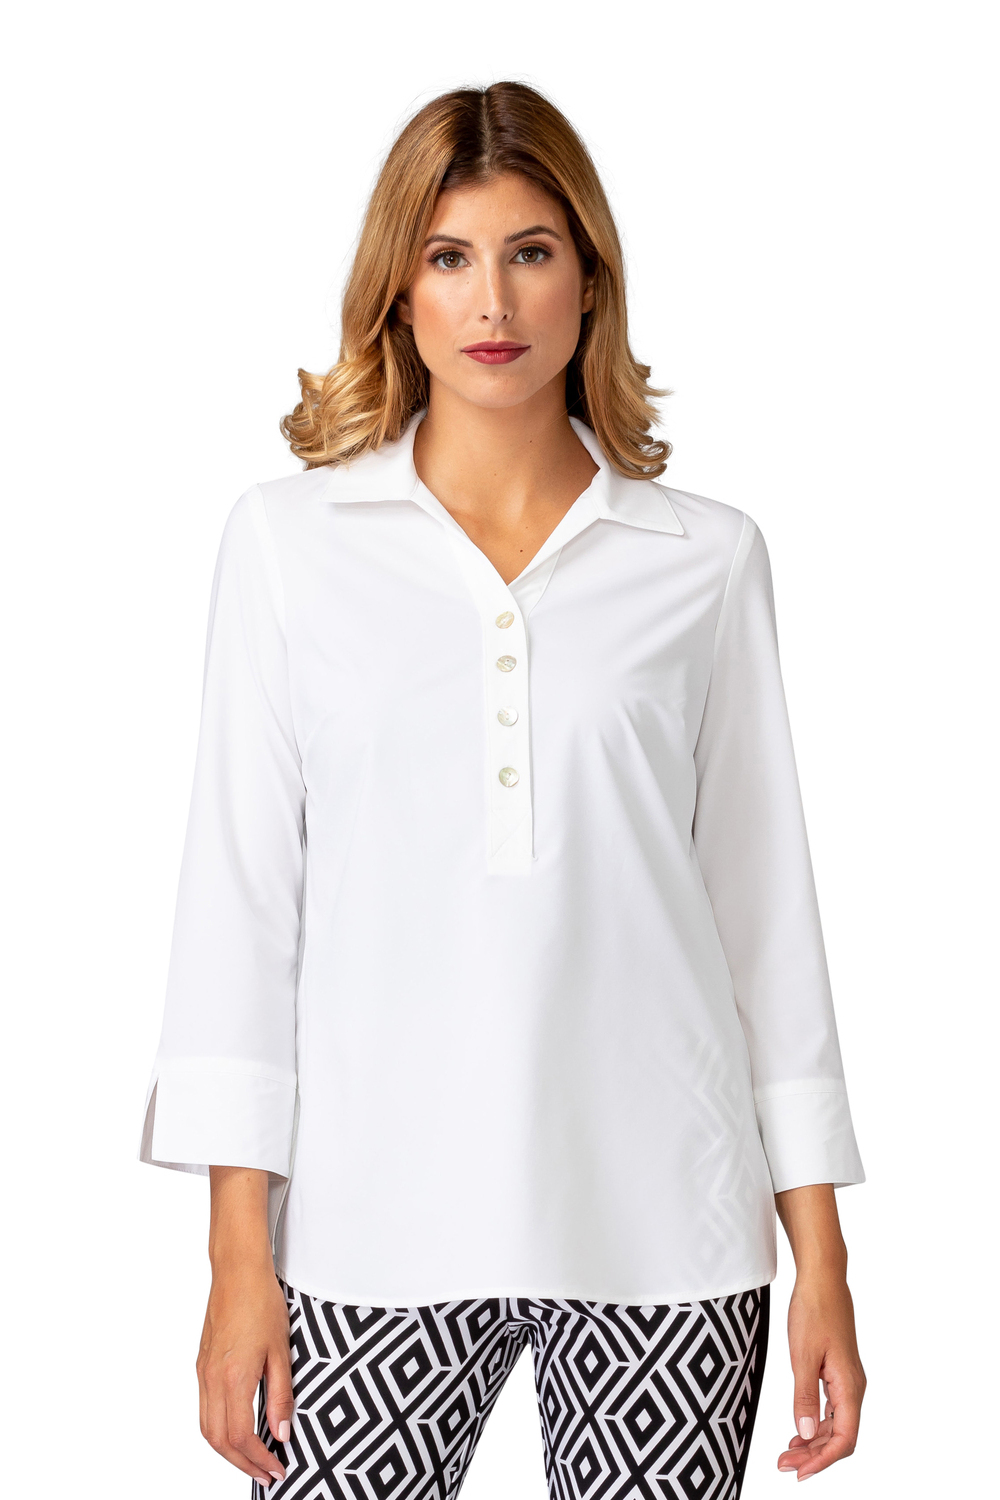 Joseph Ribkoff blouse style 193417. Blanc